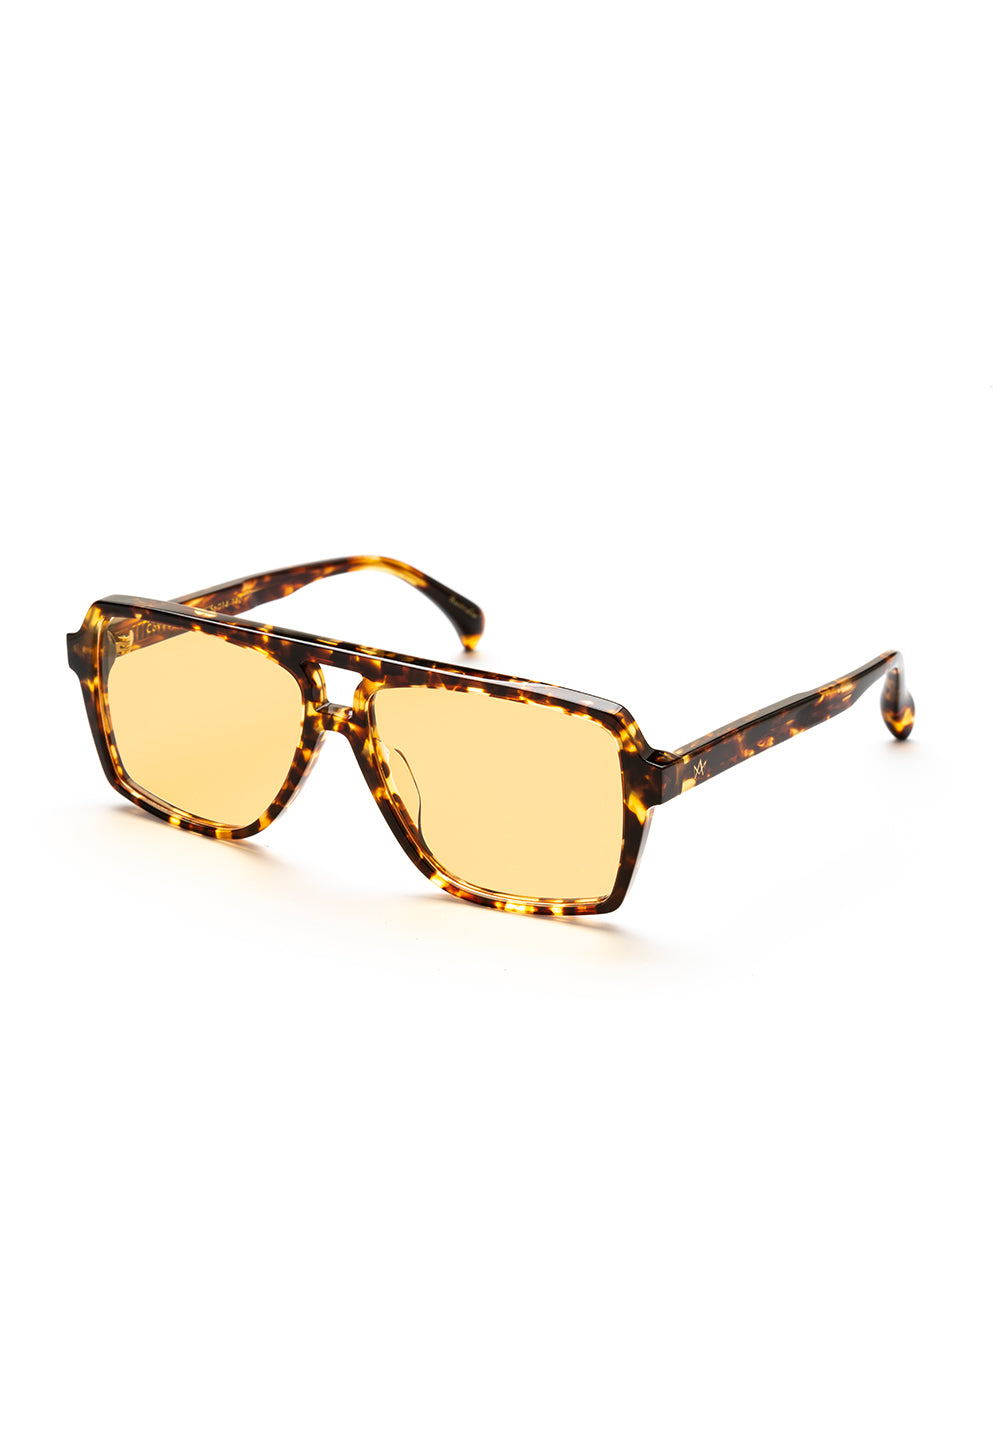 Cox Photo Chromic Sunglasses - Tort Amber sold by Angel Divine